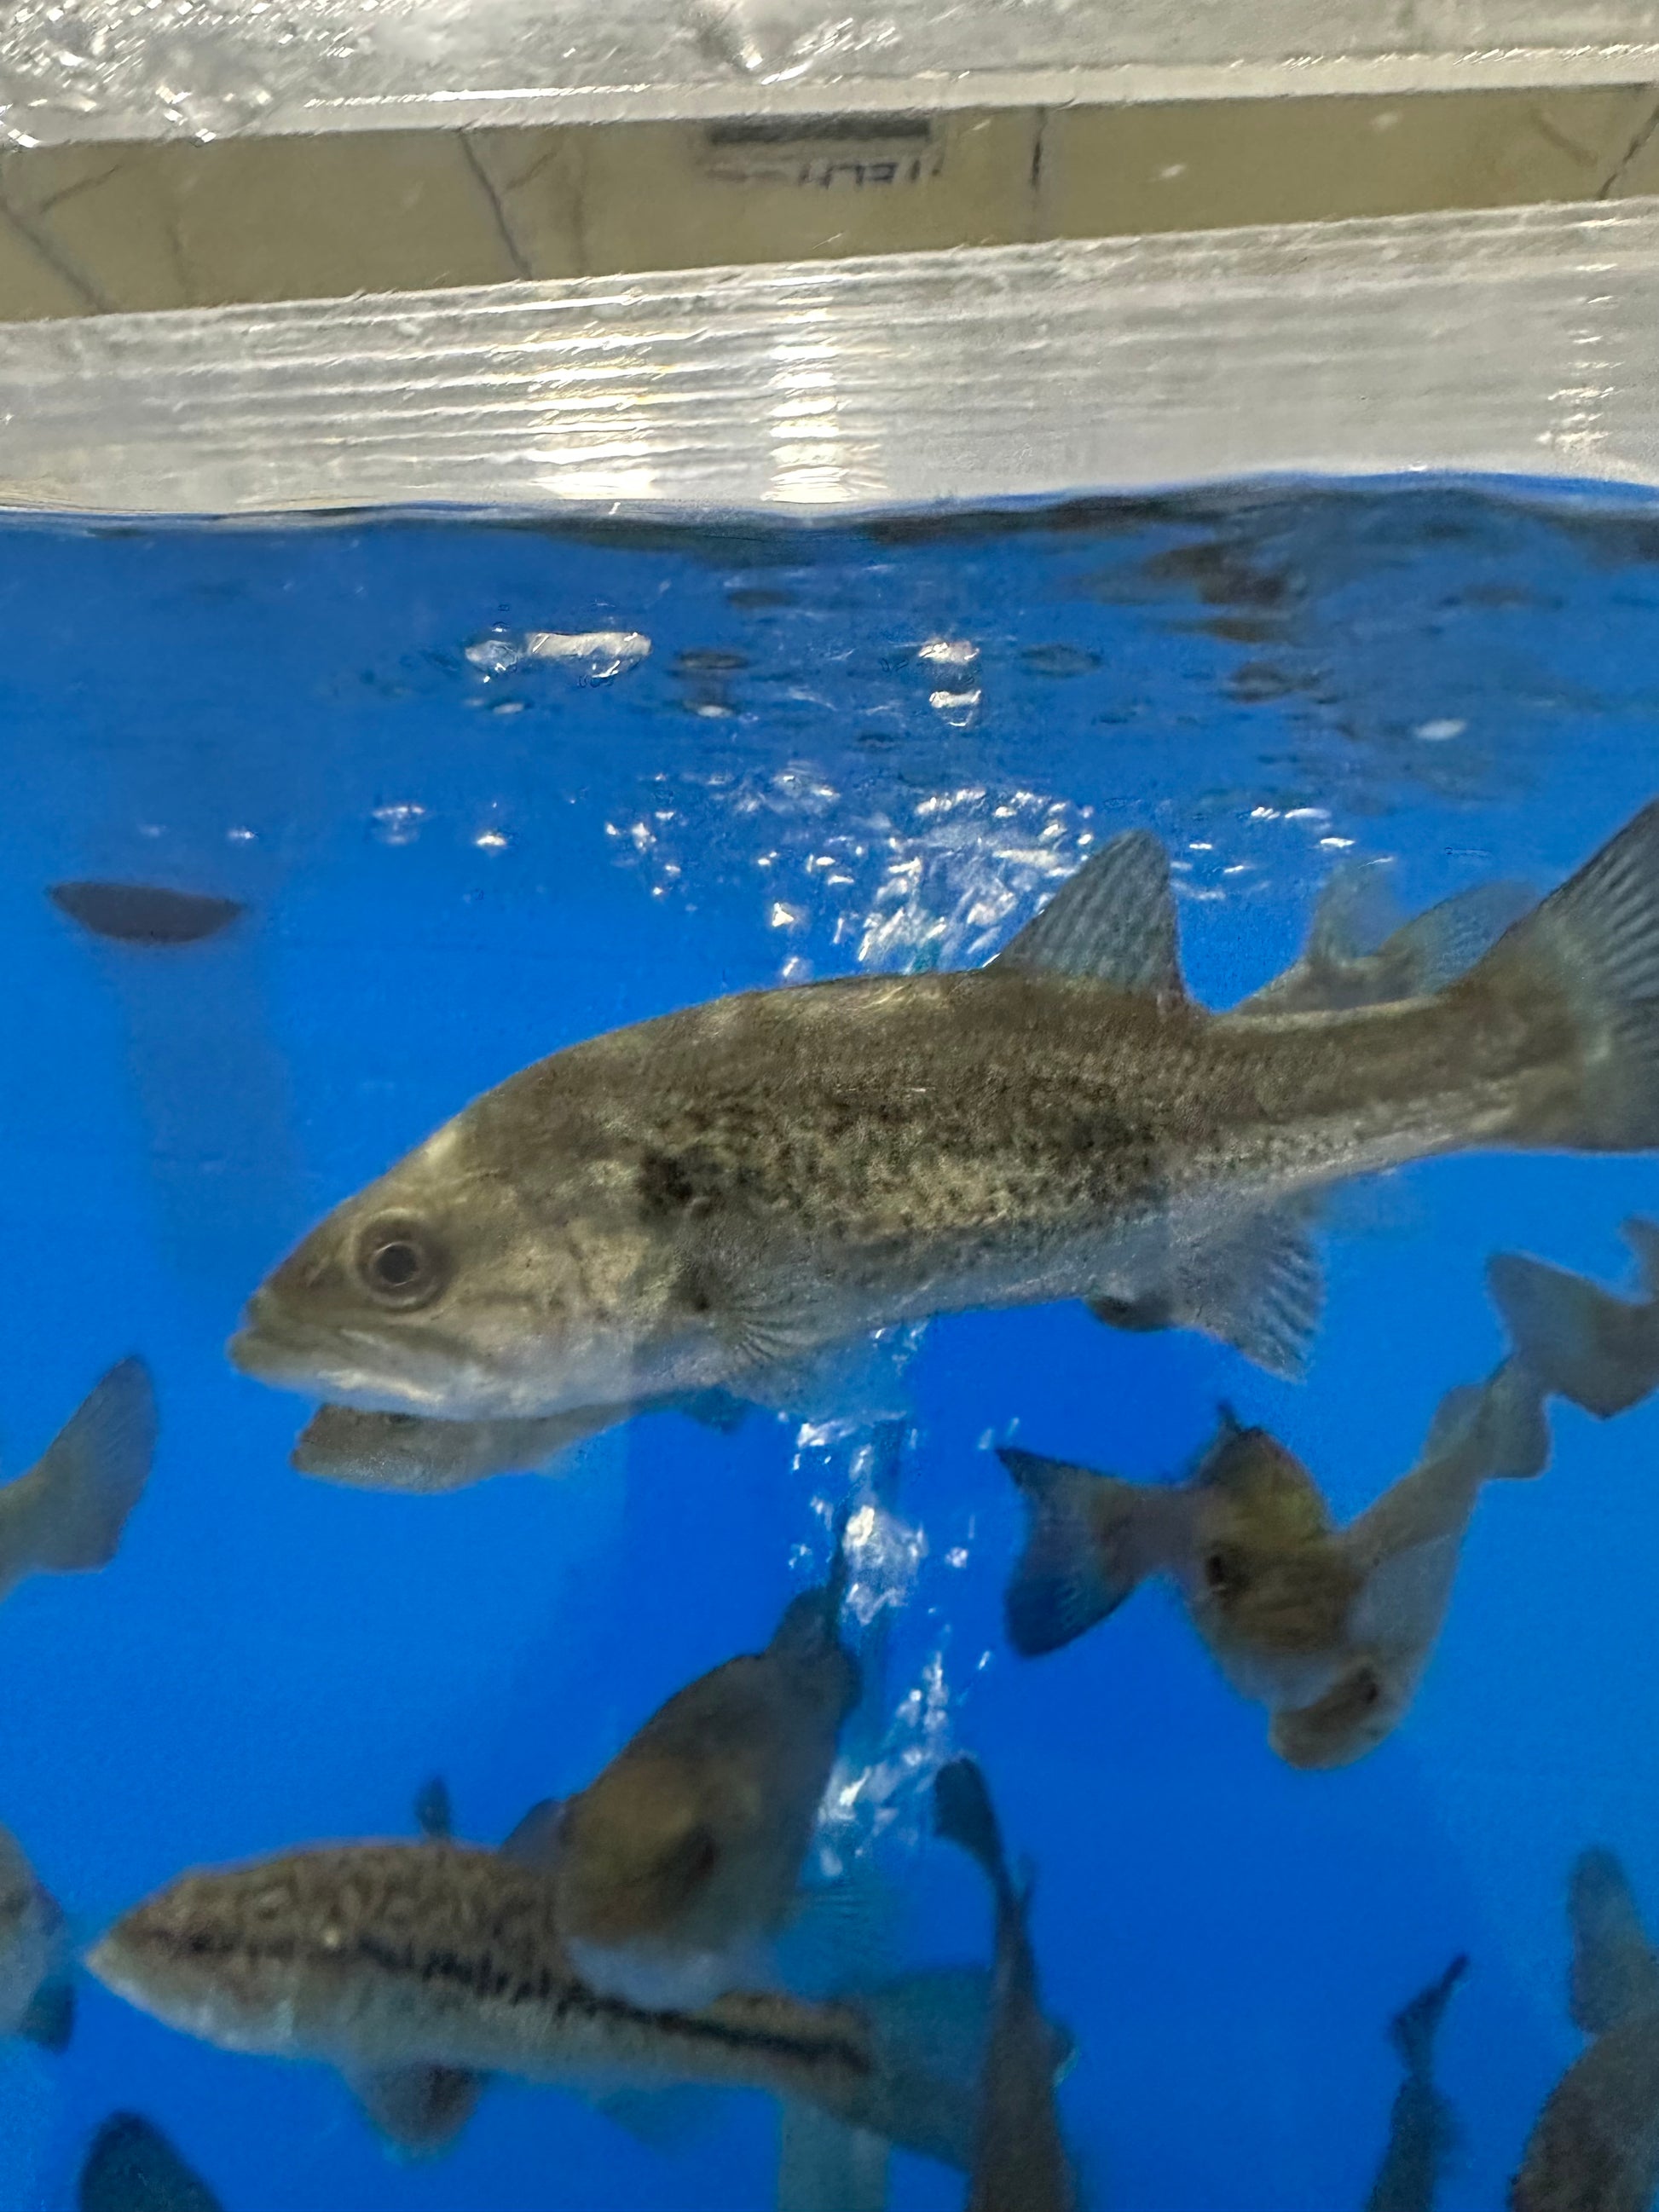 smallmouth bass aquarium